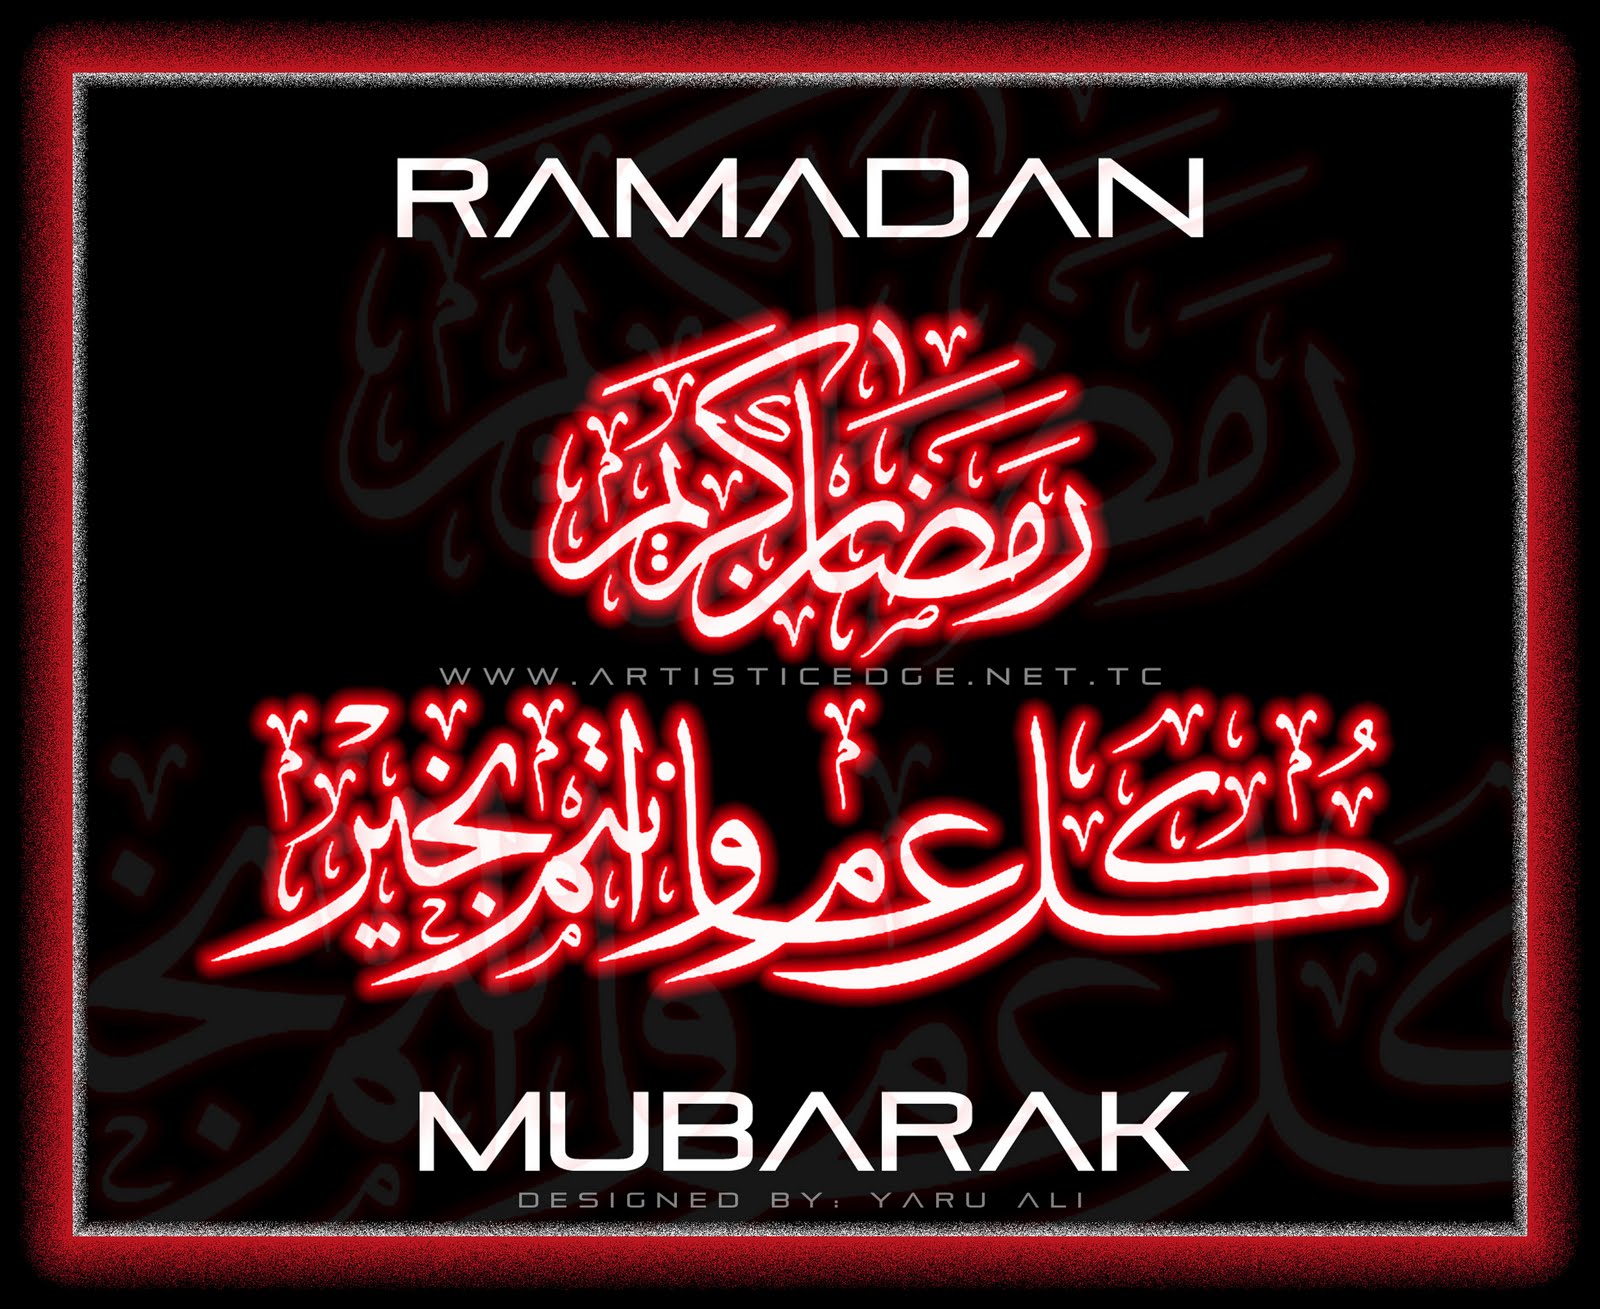 https://blogger.googleusercontent.com/img/b/R29vZ2xl/AVvXsEhzjU7LbwT7X-k6_y51_KB9npS8Awwb6A5n8pdFdXV1OSWXIXUnCO1KEKtKGMmnhG3NIUHViAsdvybsAQE65KhcN8p7Fi57gf9BDc6dx9skH5aTgJl1jKLQ6jfq9NG2rlsAkXfIu2LhurVG/s1600/Ramadan+Mubarak+Wallpapers+2011.jpg